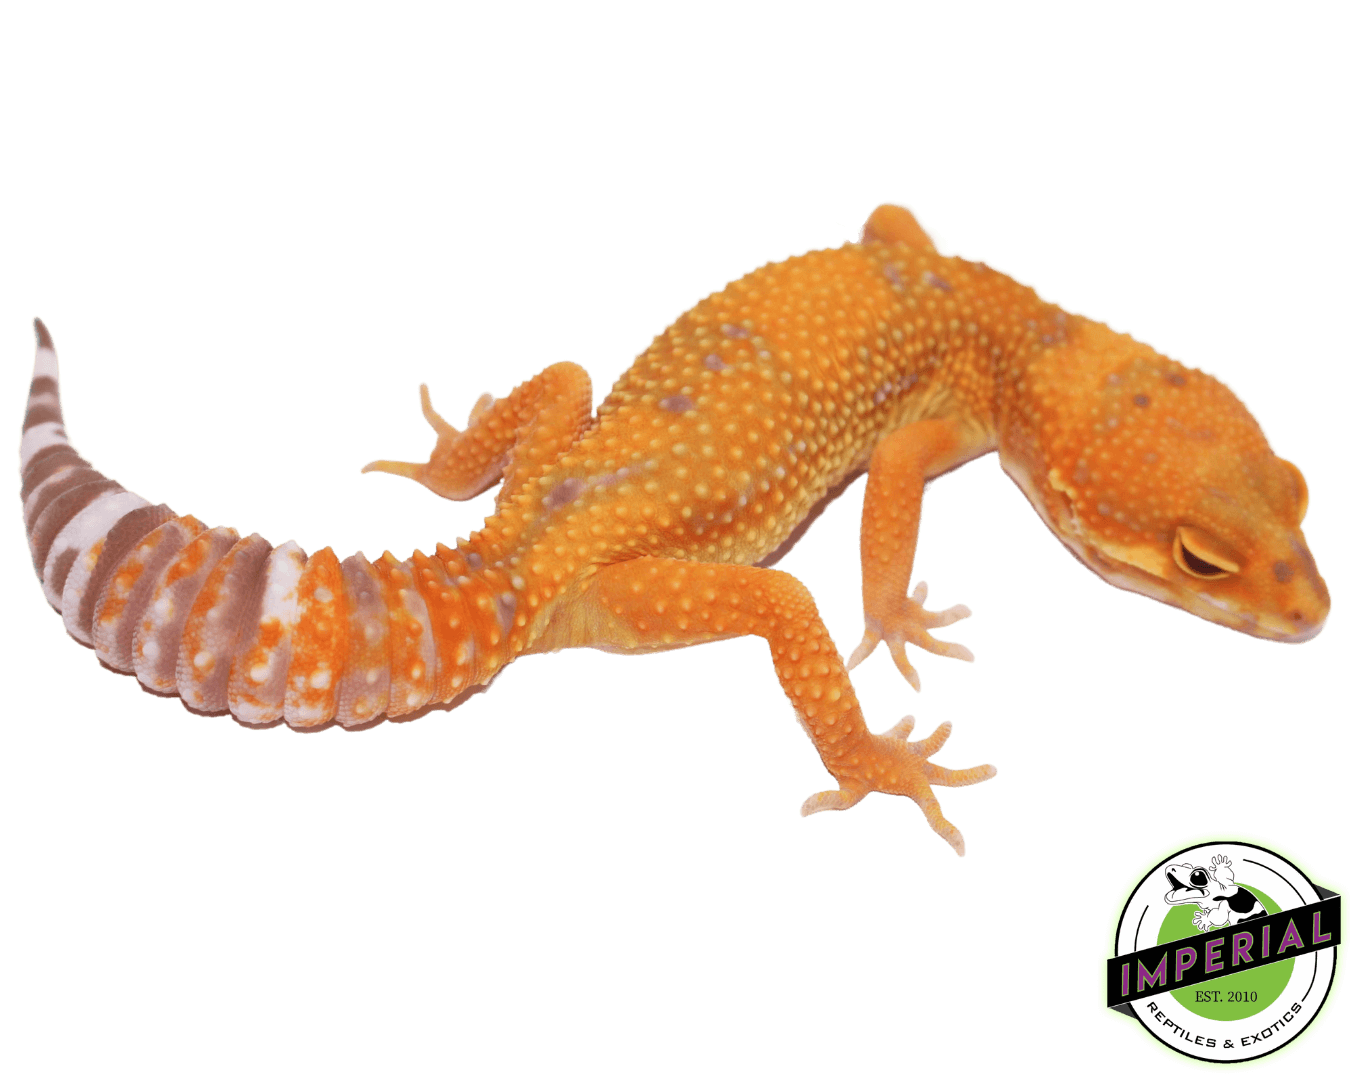 tangerine jungle tremper leopard gecko for sale, buy reptiles online